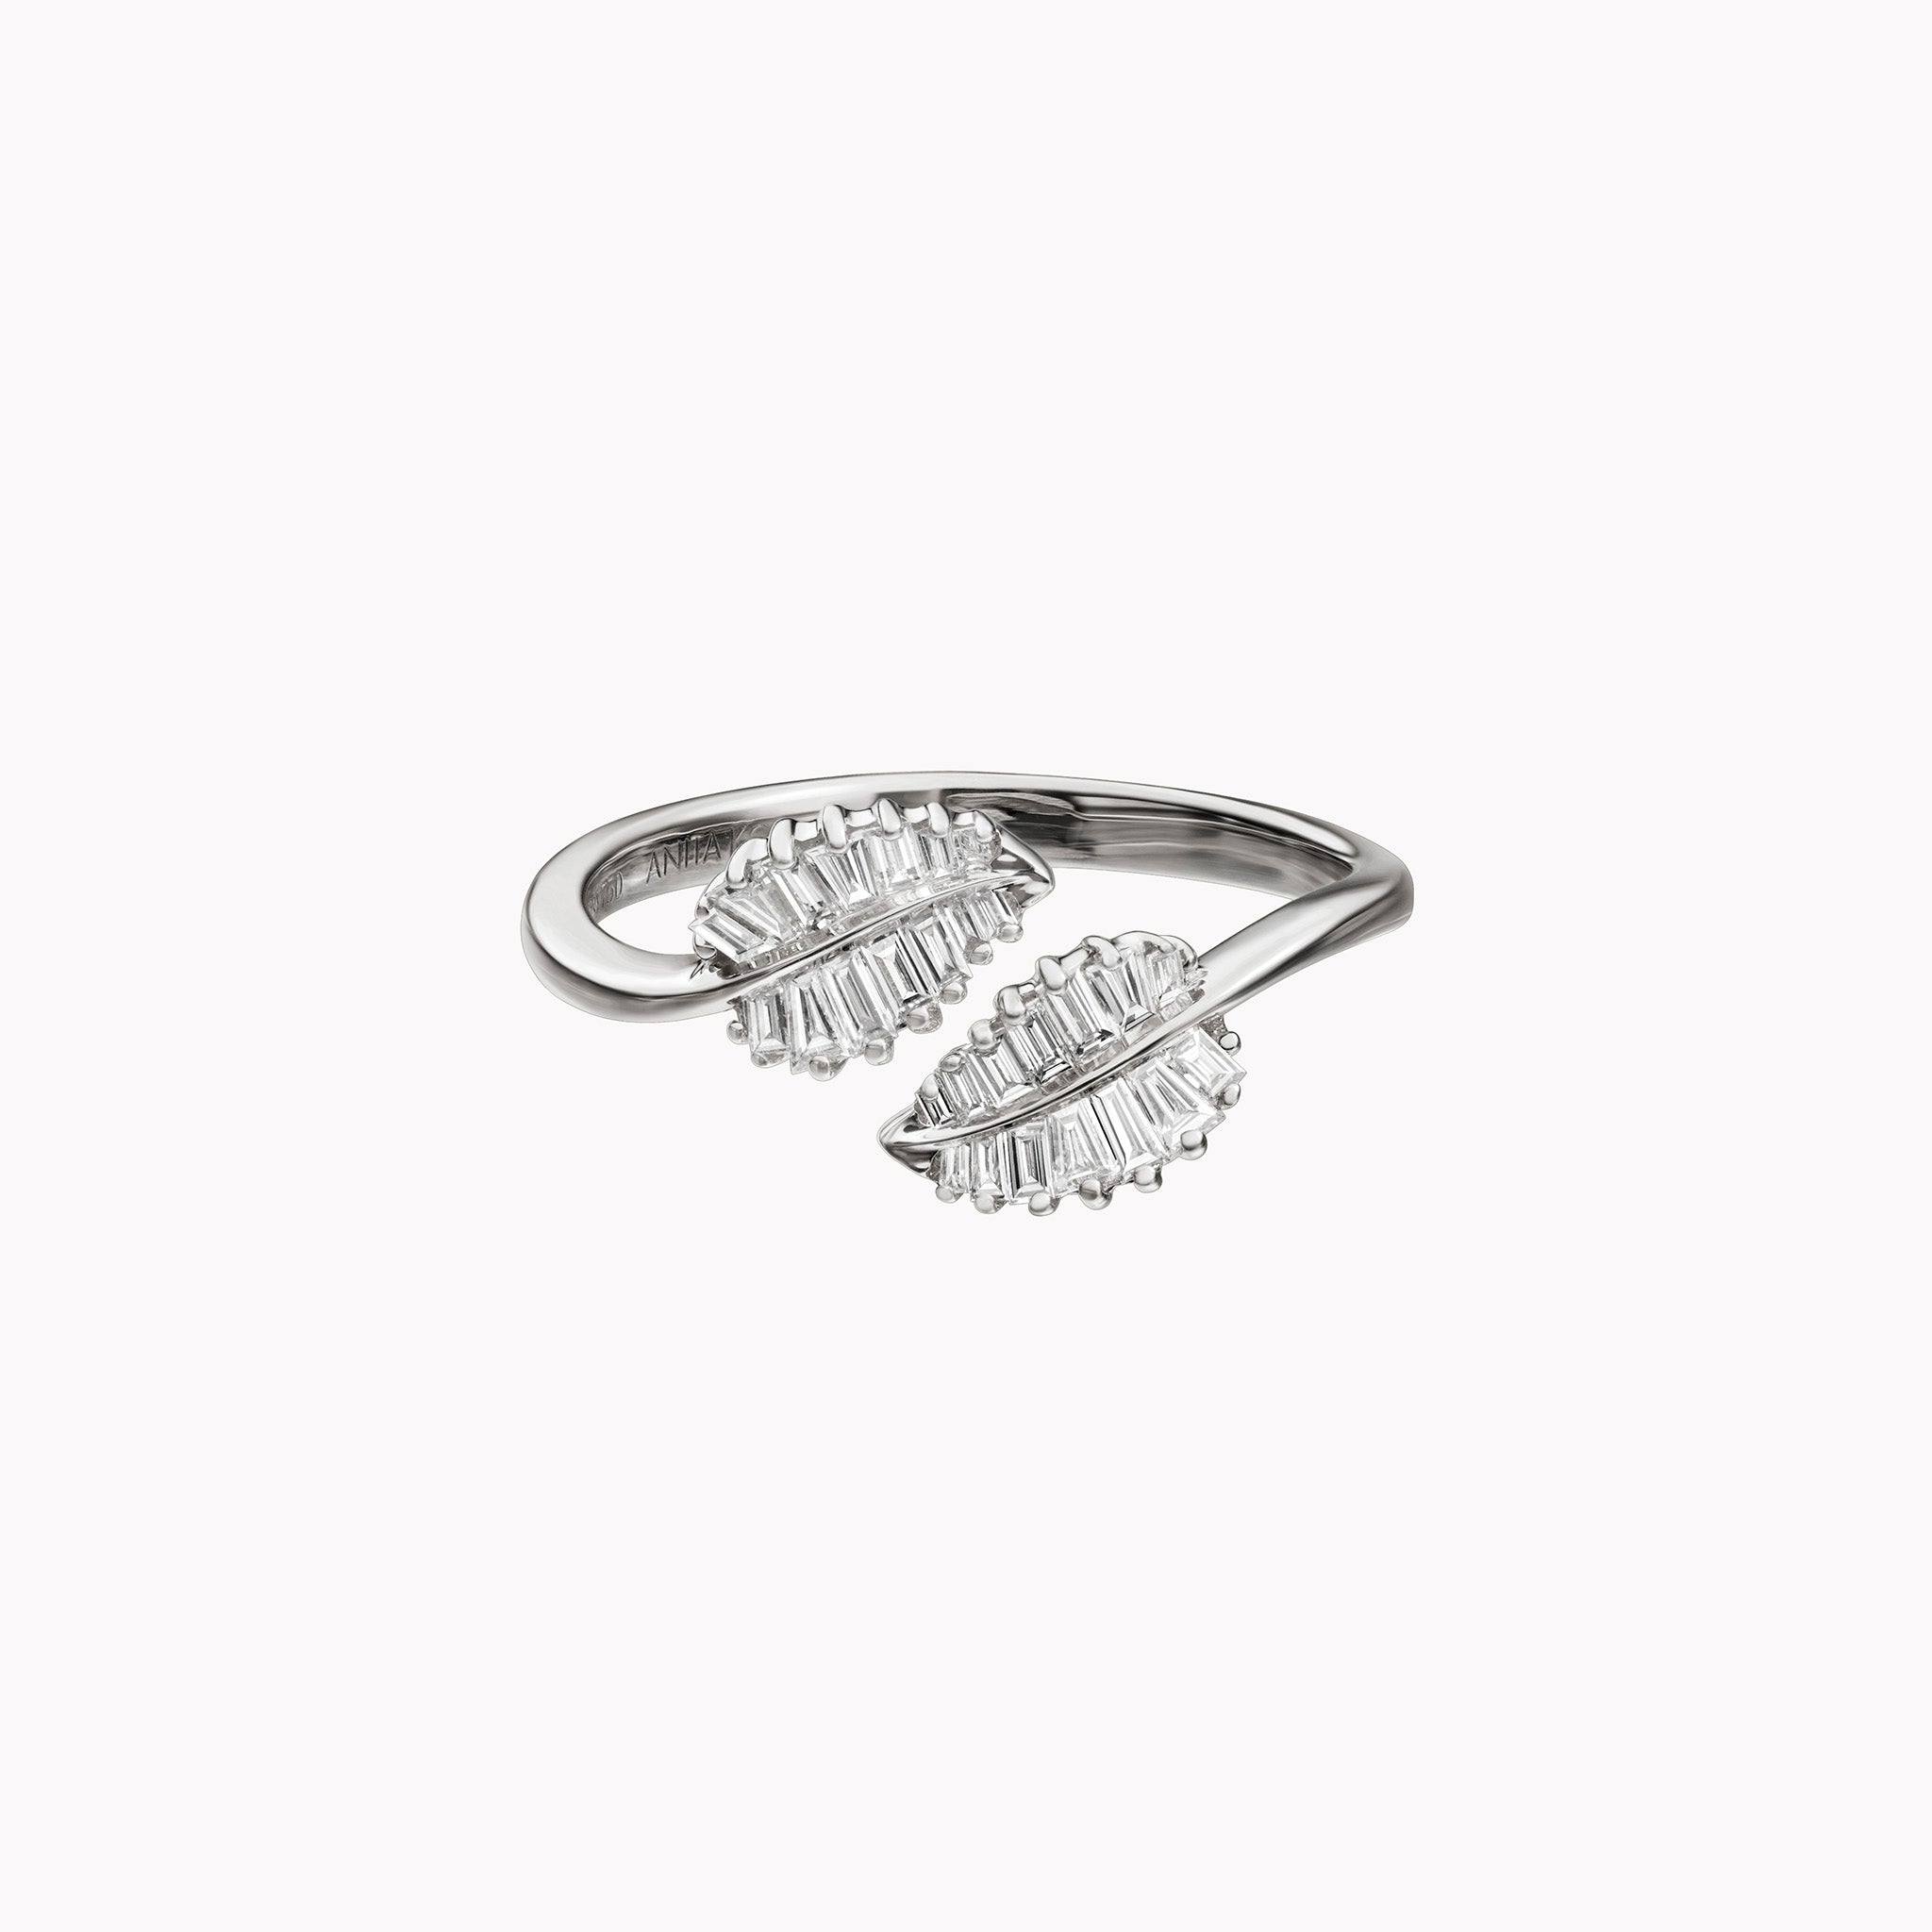 Material Good | Anita Ko | Small Palm Leaf Diamond Ring